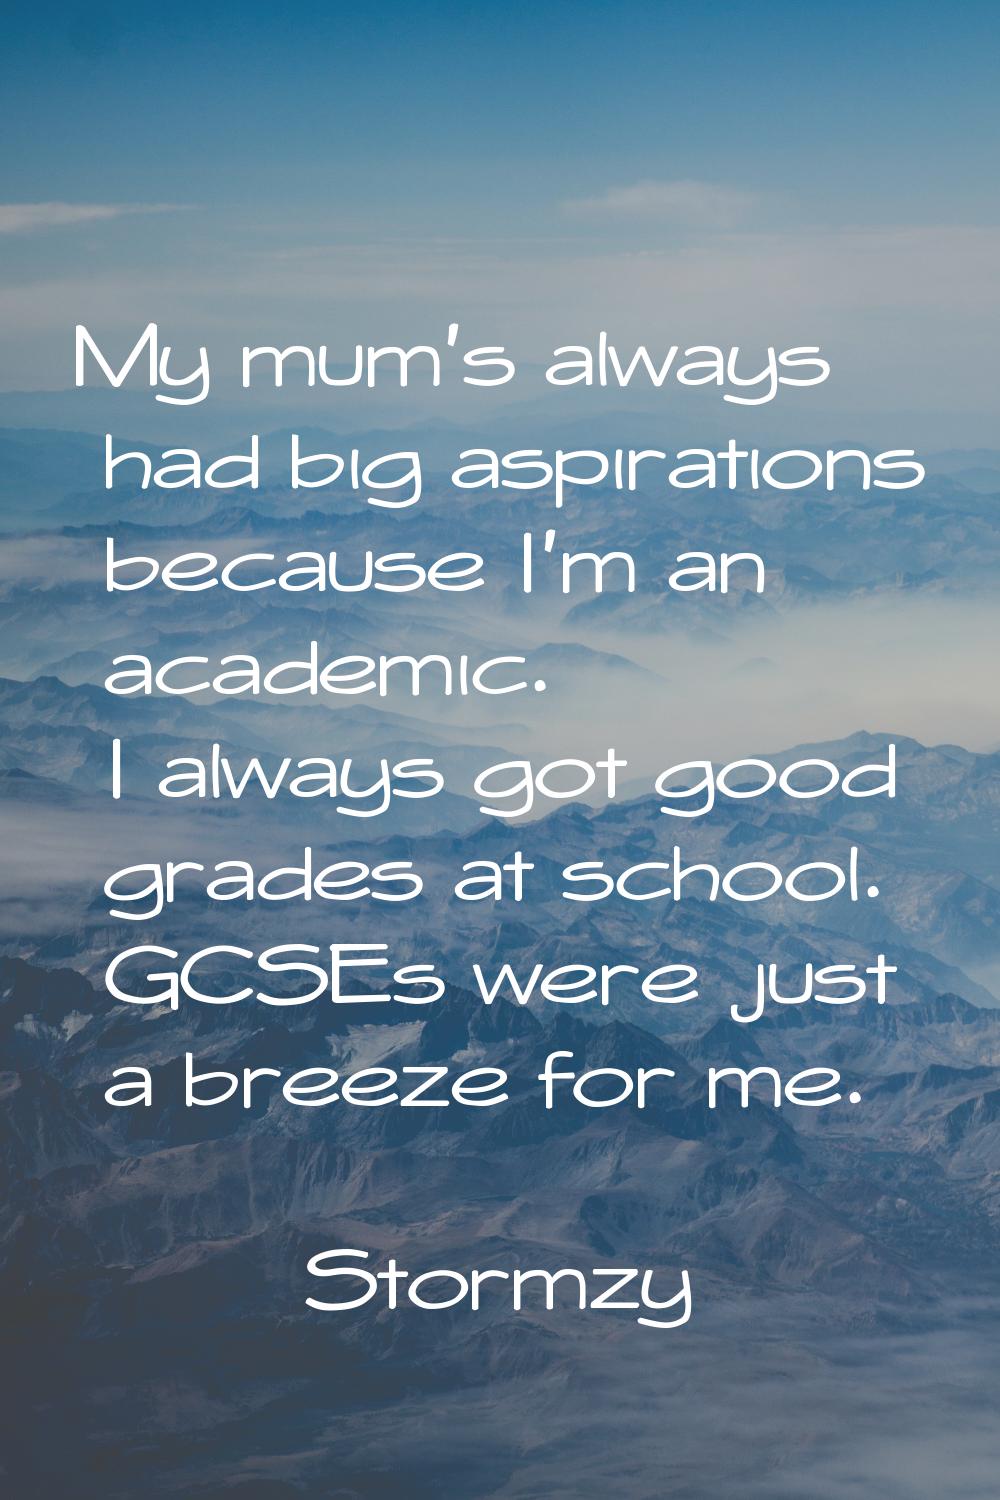 My mum's always had big aspirations because I'm an academic. I always got good grades at school. GC